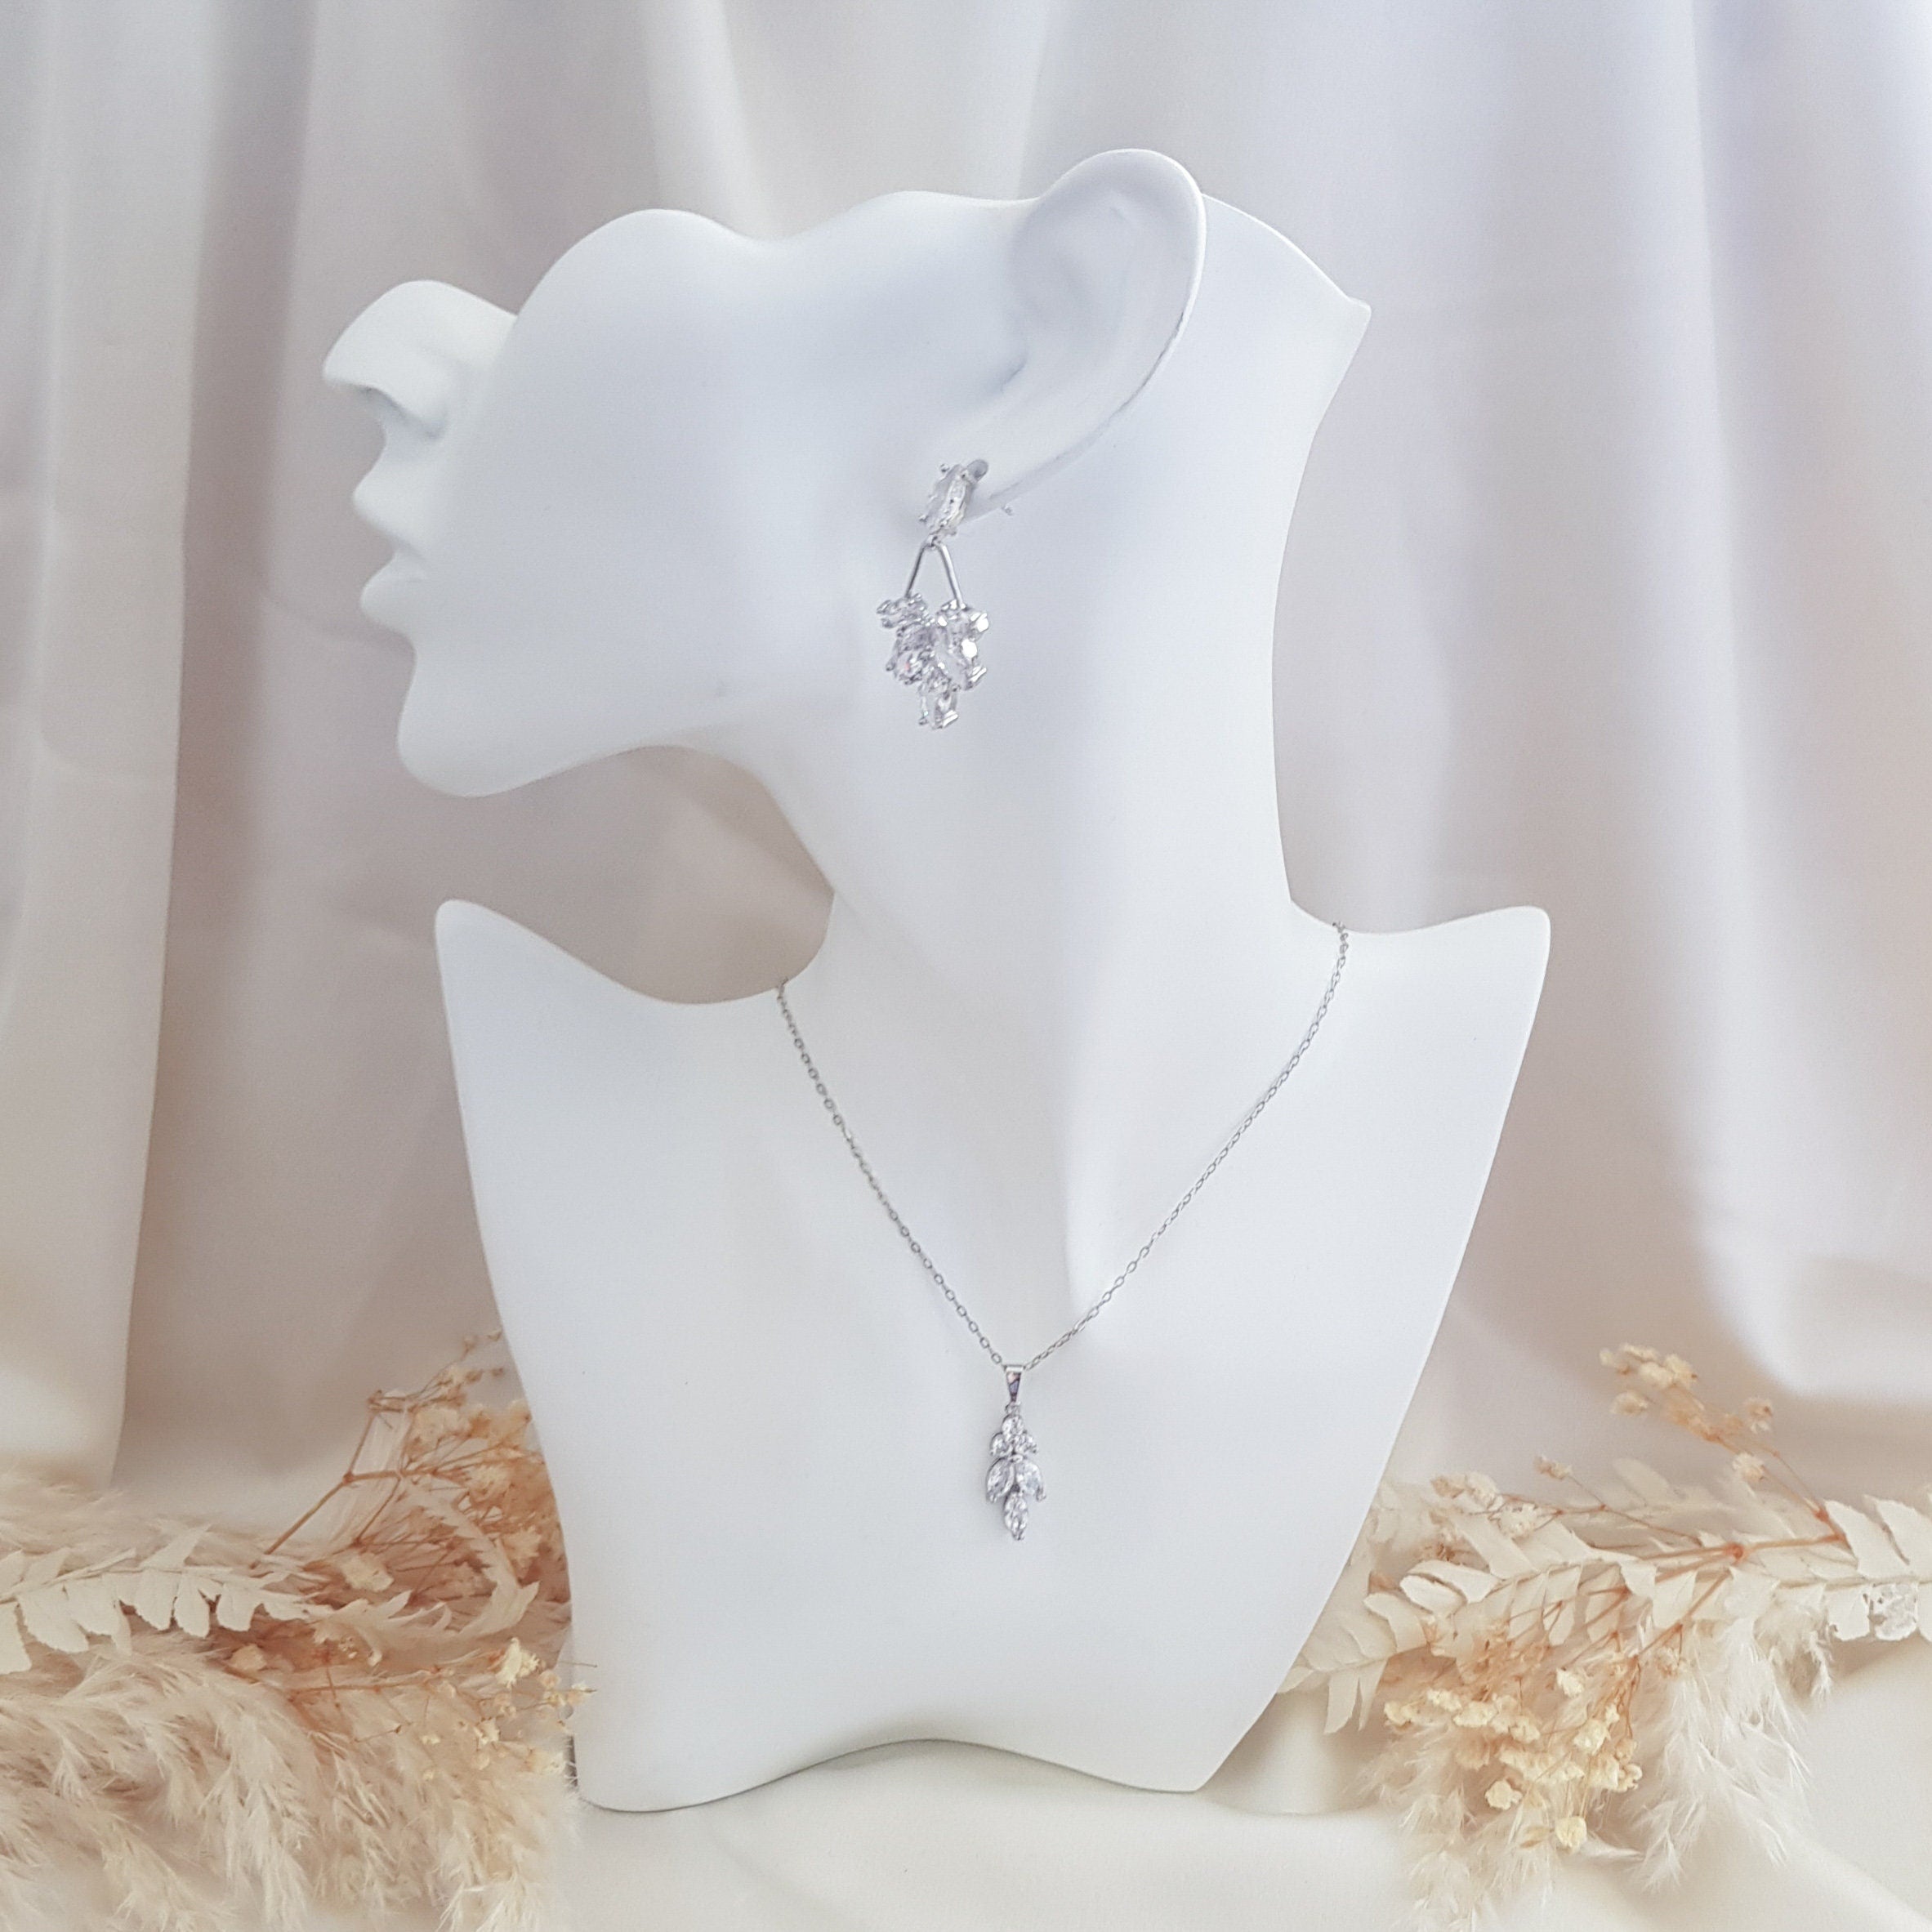 Art Deco Earrings, Bridal Earrings, Crystal Drop Earrings, Silver Earrings, Wedding Earrings, Bridesmaid Gift, Bridal Jewellery